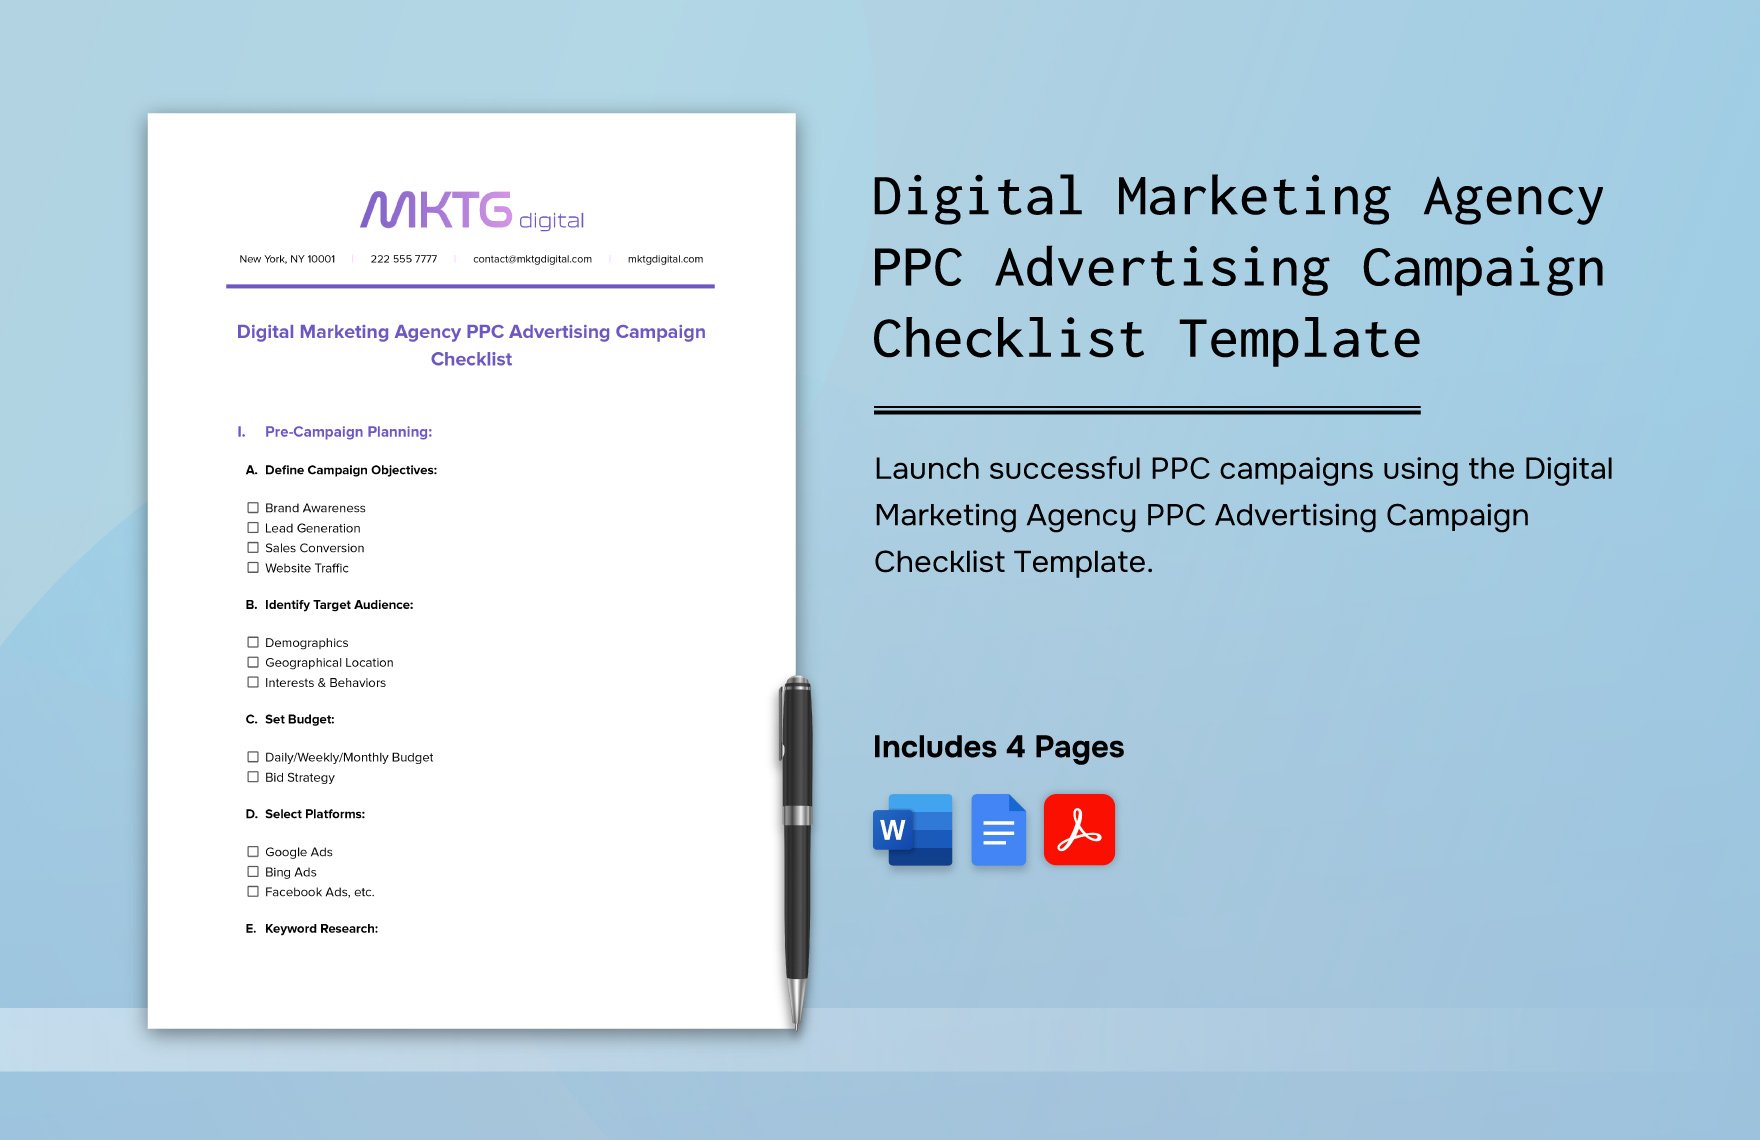 Digital Marketing Agency PPC Advertising Campaign Checklist Template